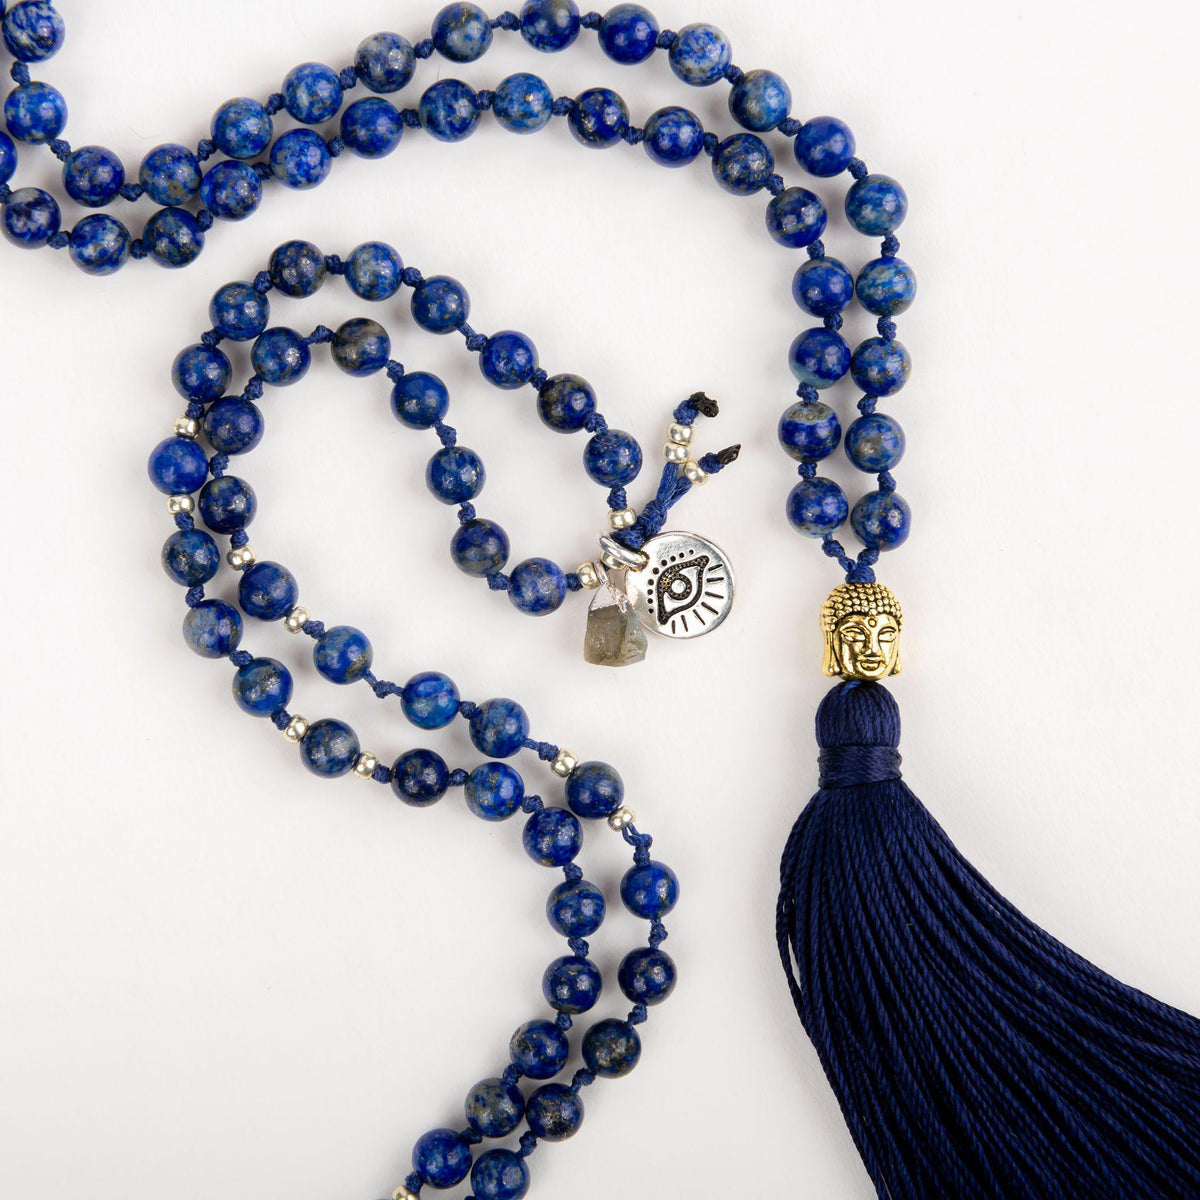 Lapis Lazuli mala beads, mala necklace and mala bracelet, yoga jewelry, DIY craft project for ladies night, bachelorette party, yoga teacher gift by merakalpa malas